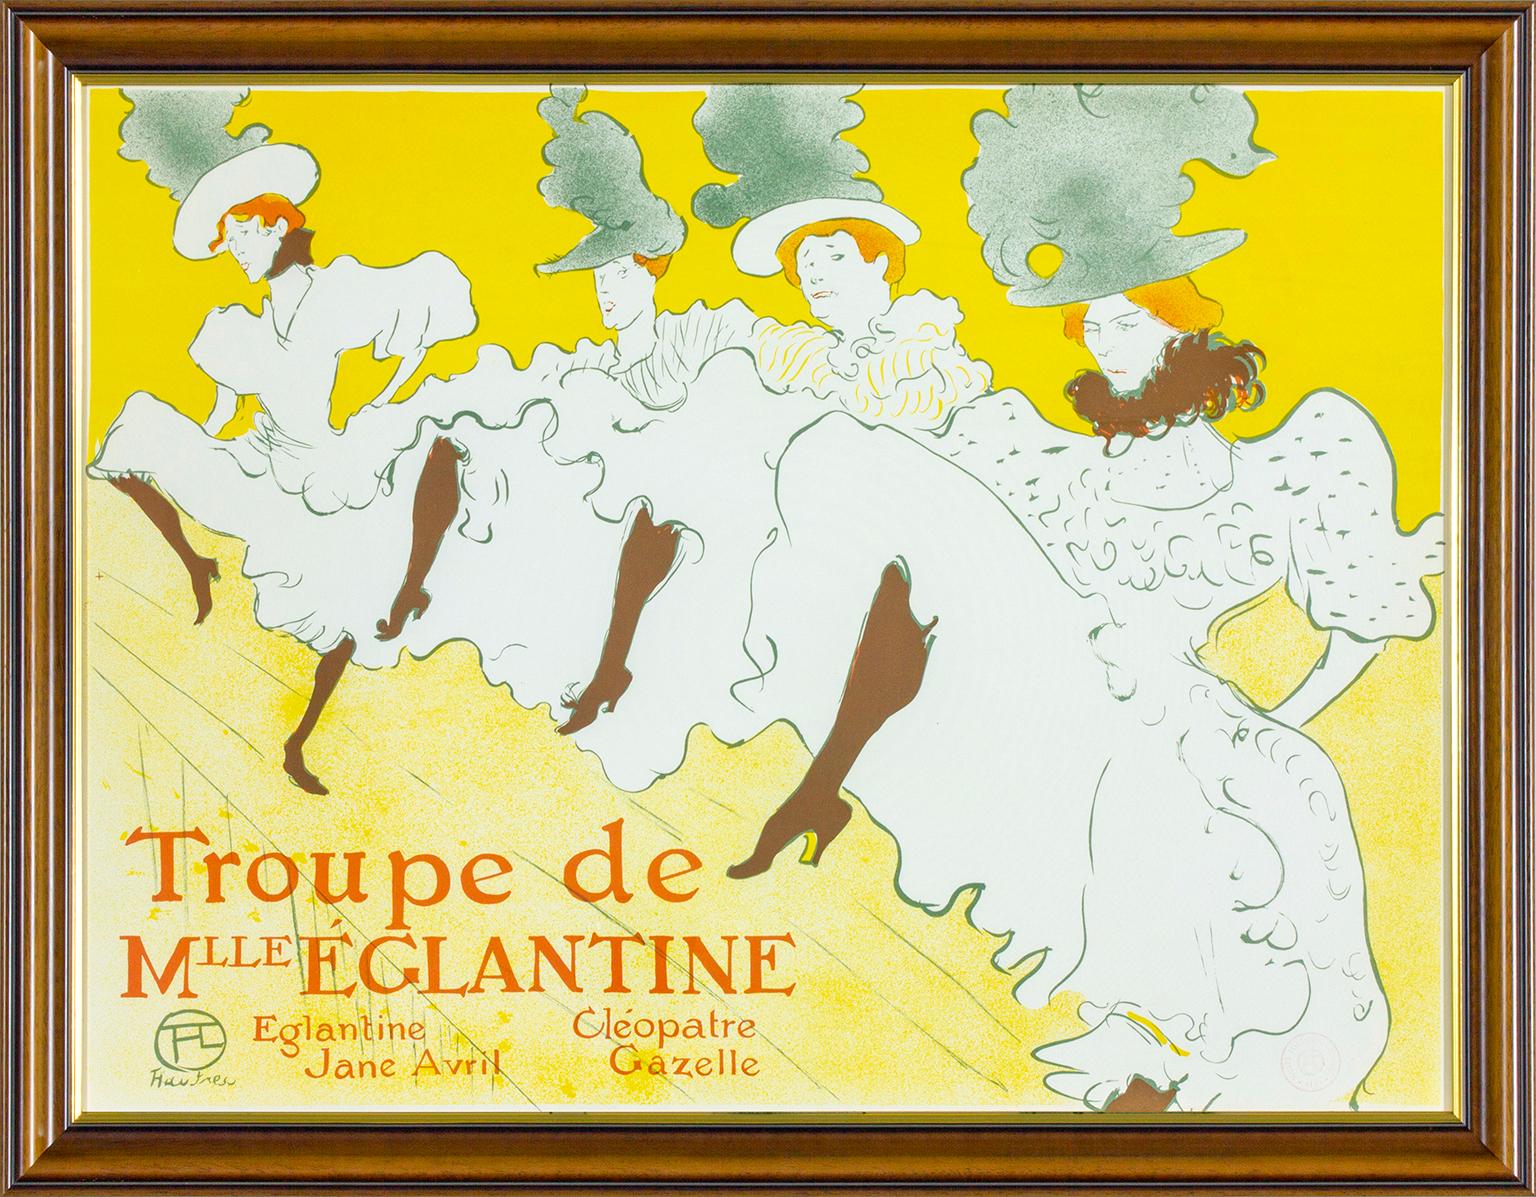 „Troupe de M'lle Eglantine“ Plakat in limitierter Auflage, Albi Museum, 1974